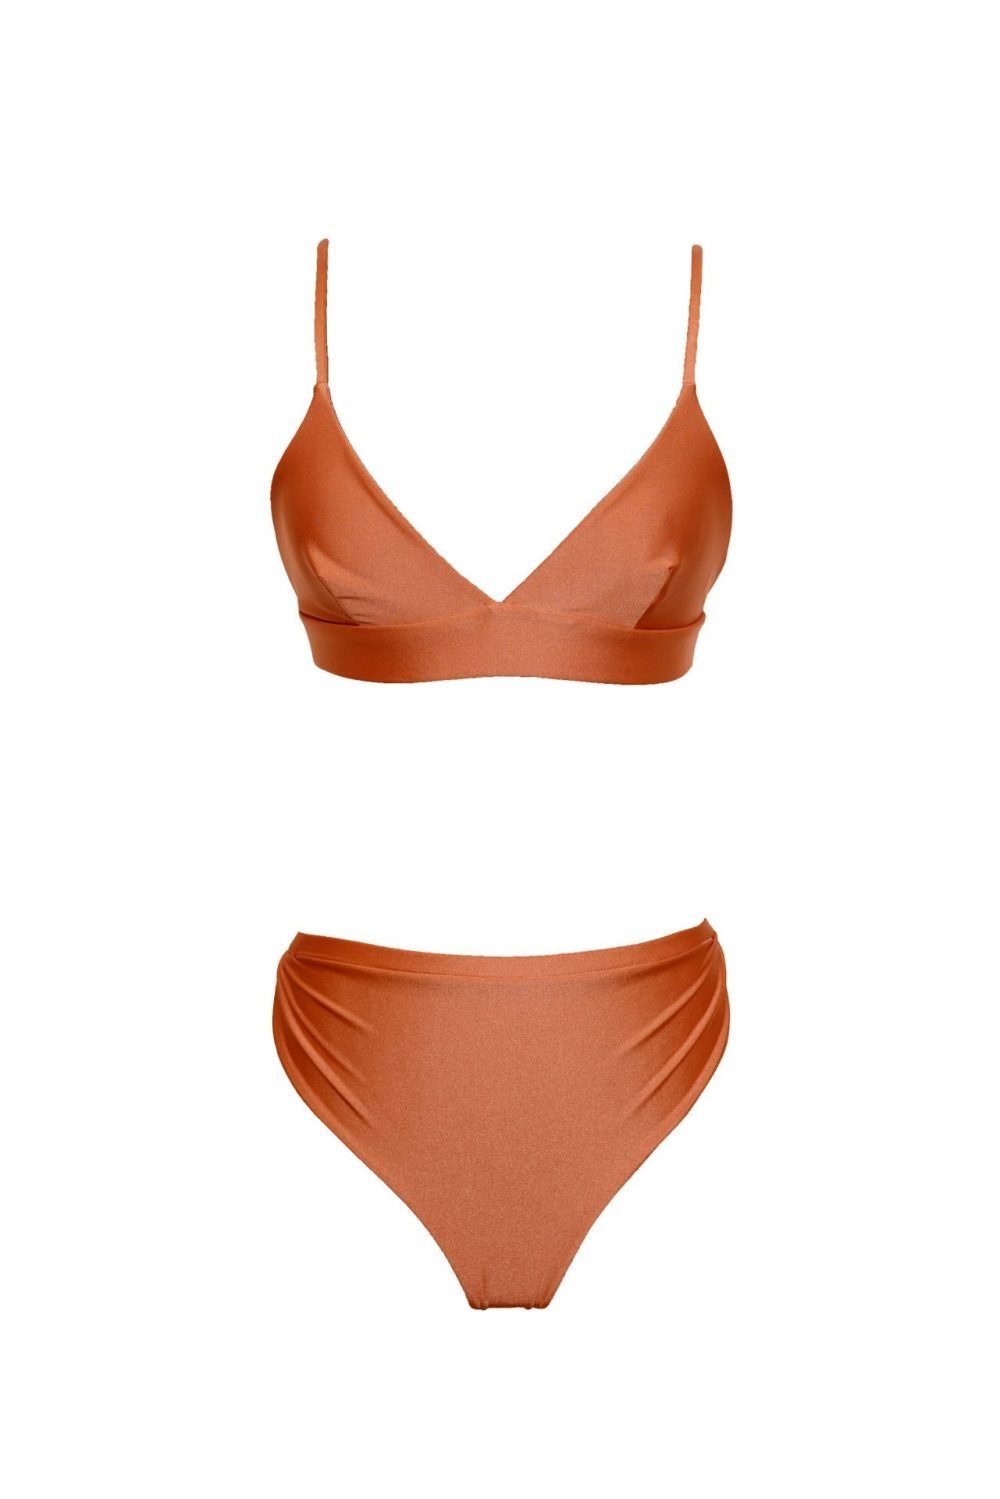 parallel Brig vonk Lush shimmering bikini | Kinda 3D Swimwear